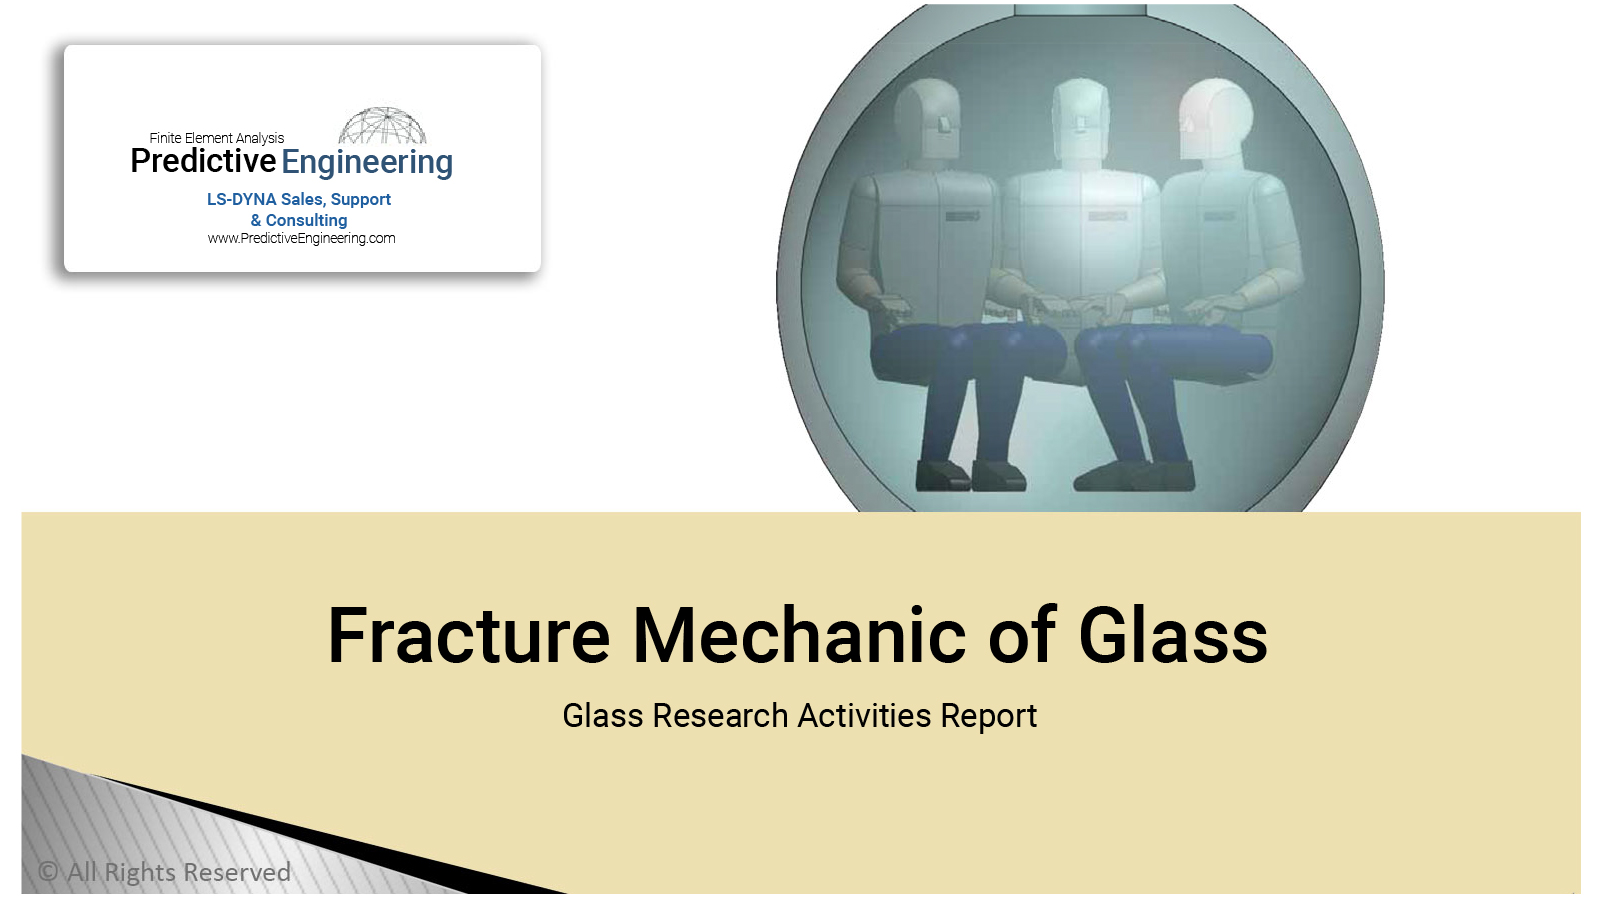 Fracture Mechanics of Glass Image